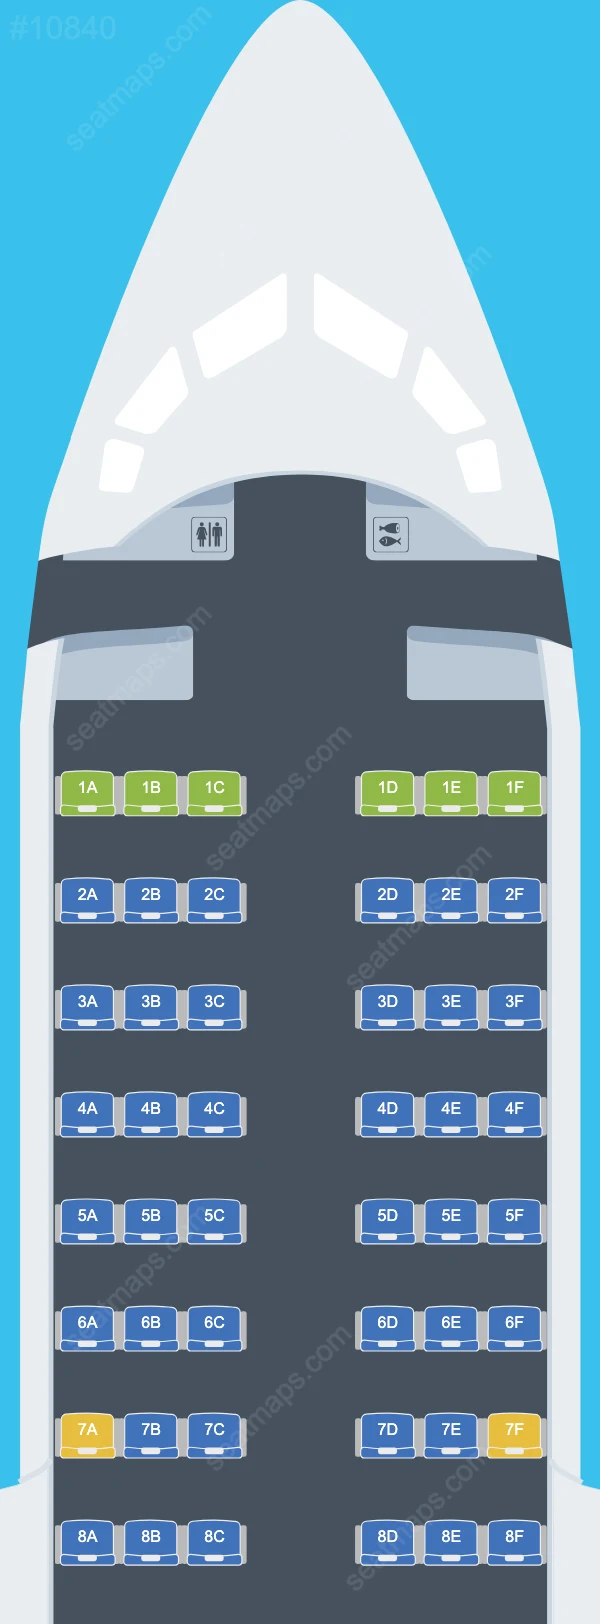 EcoJet (Linea Aerea EcoJet) Avro RJ100 Avroliner Seat Maps RJ100